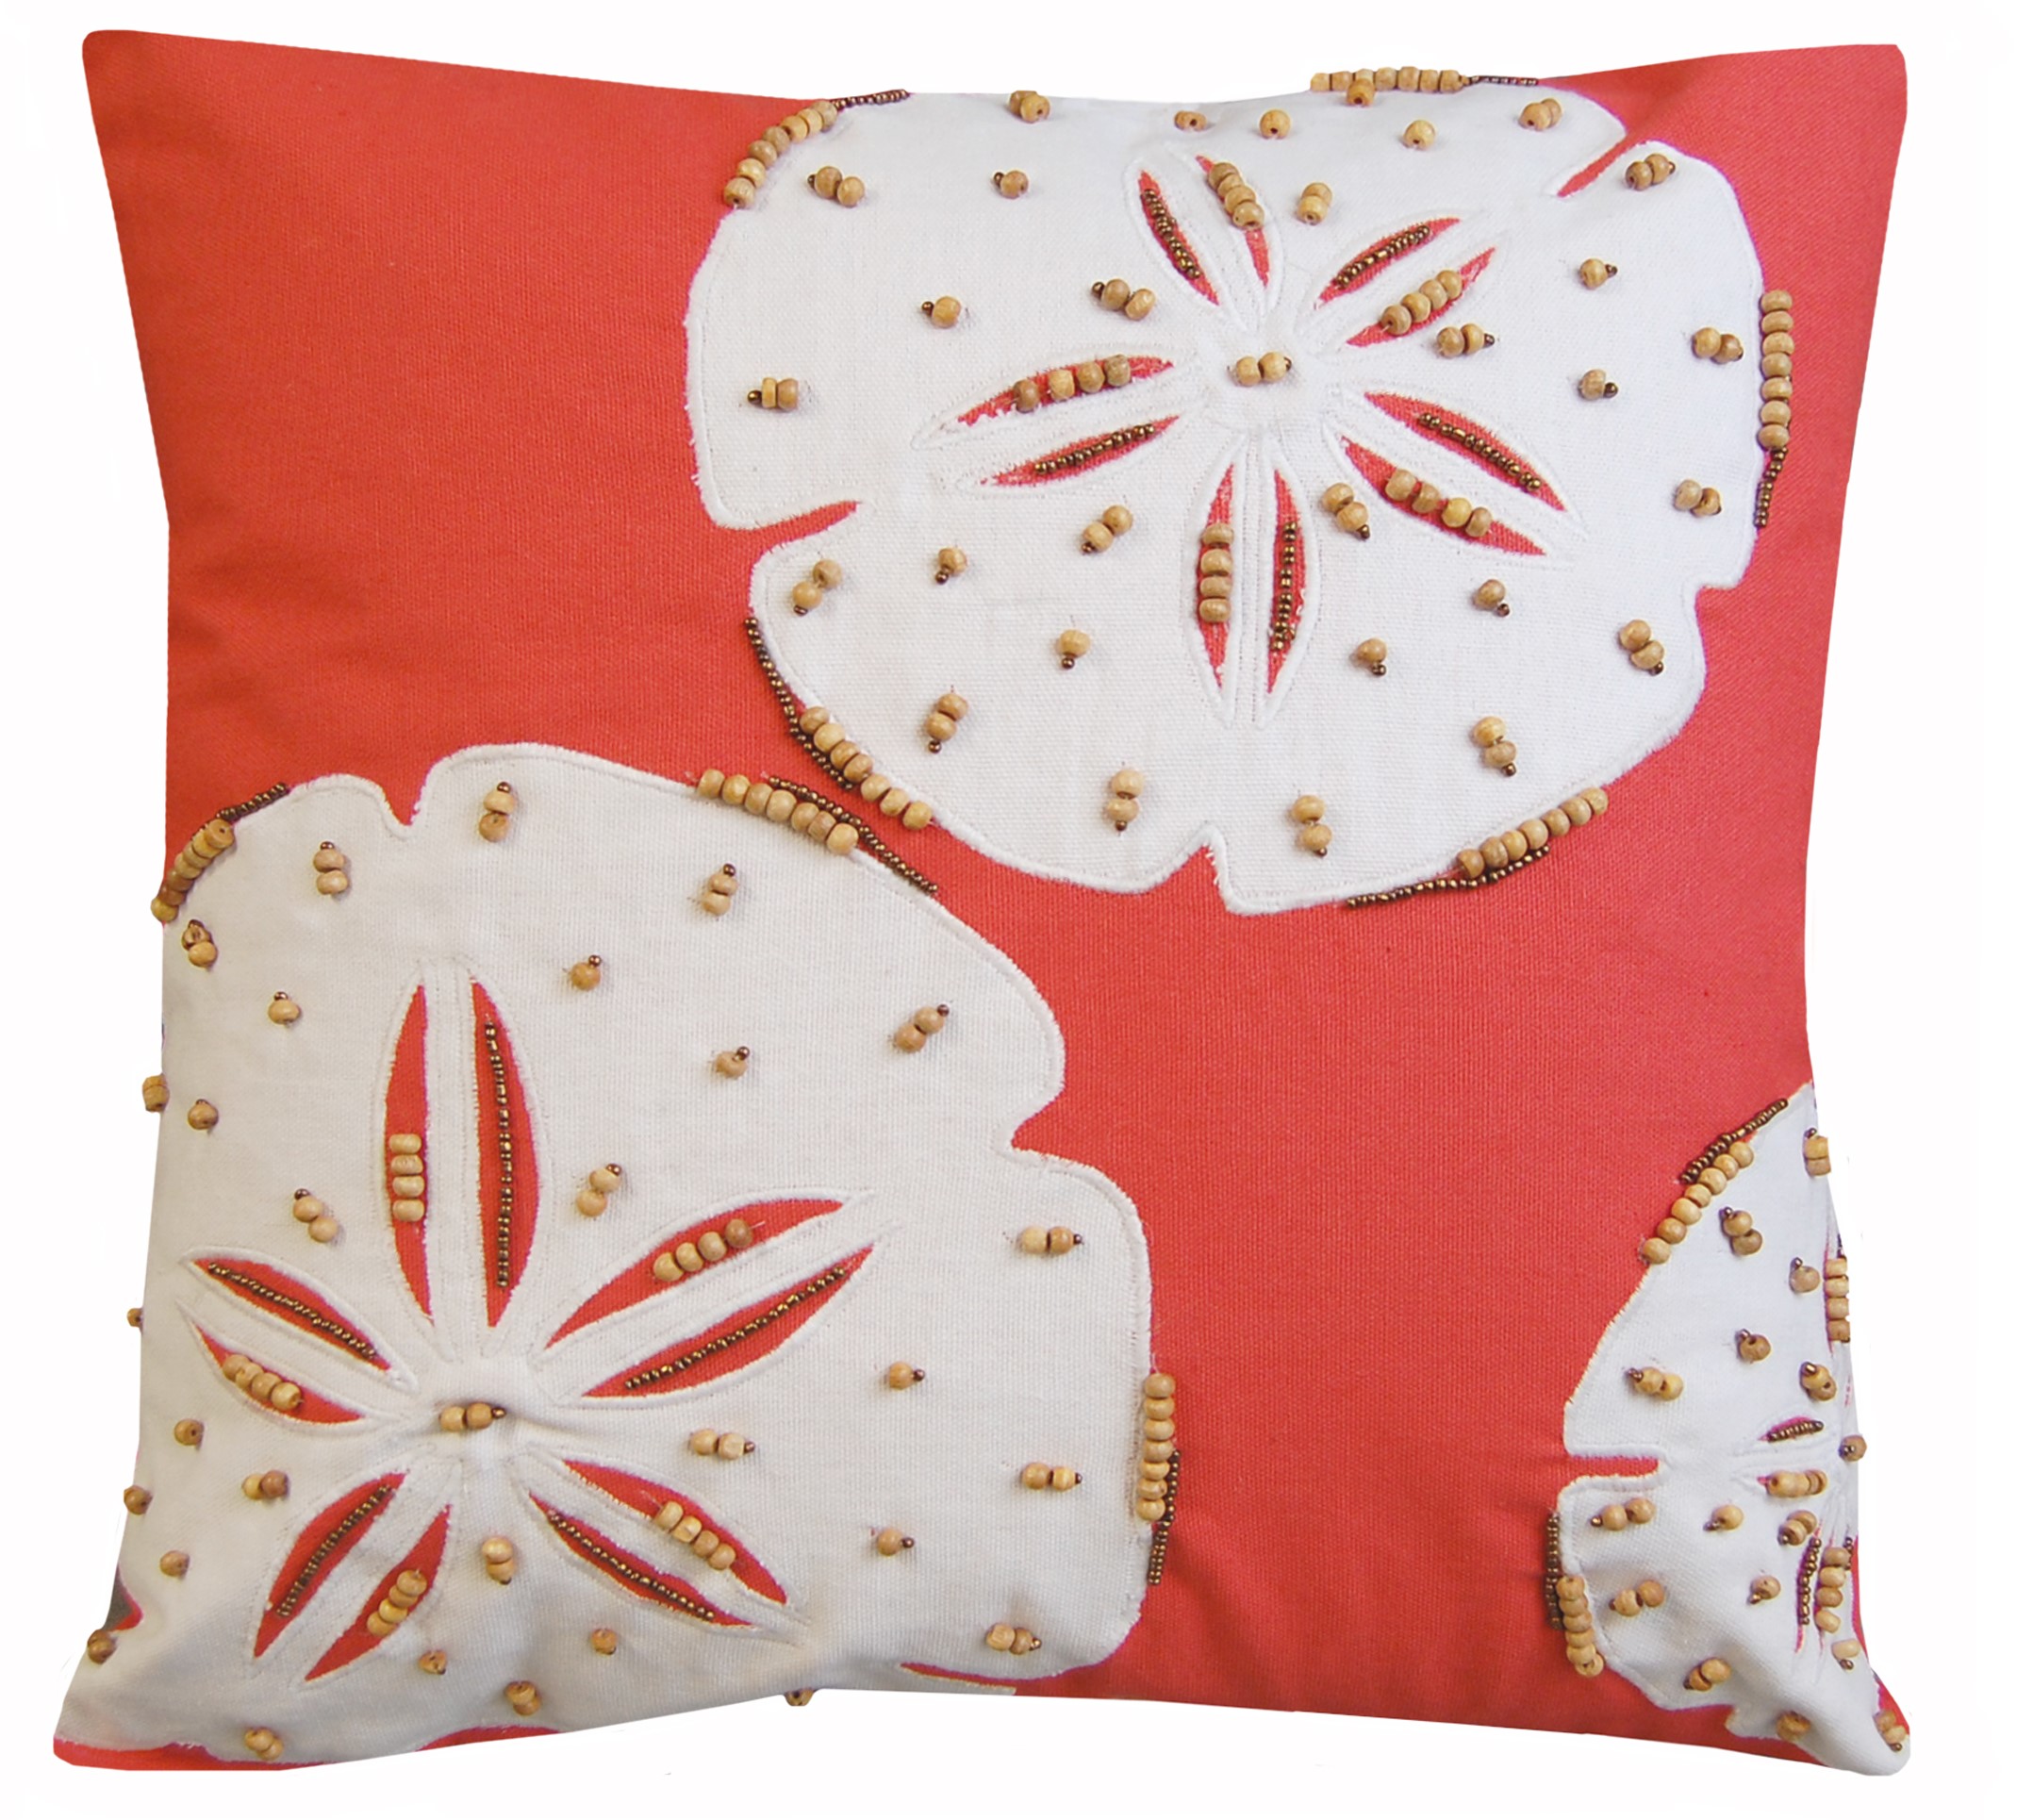 Coral Sand Dollar Pillows